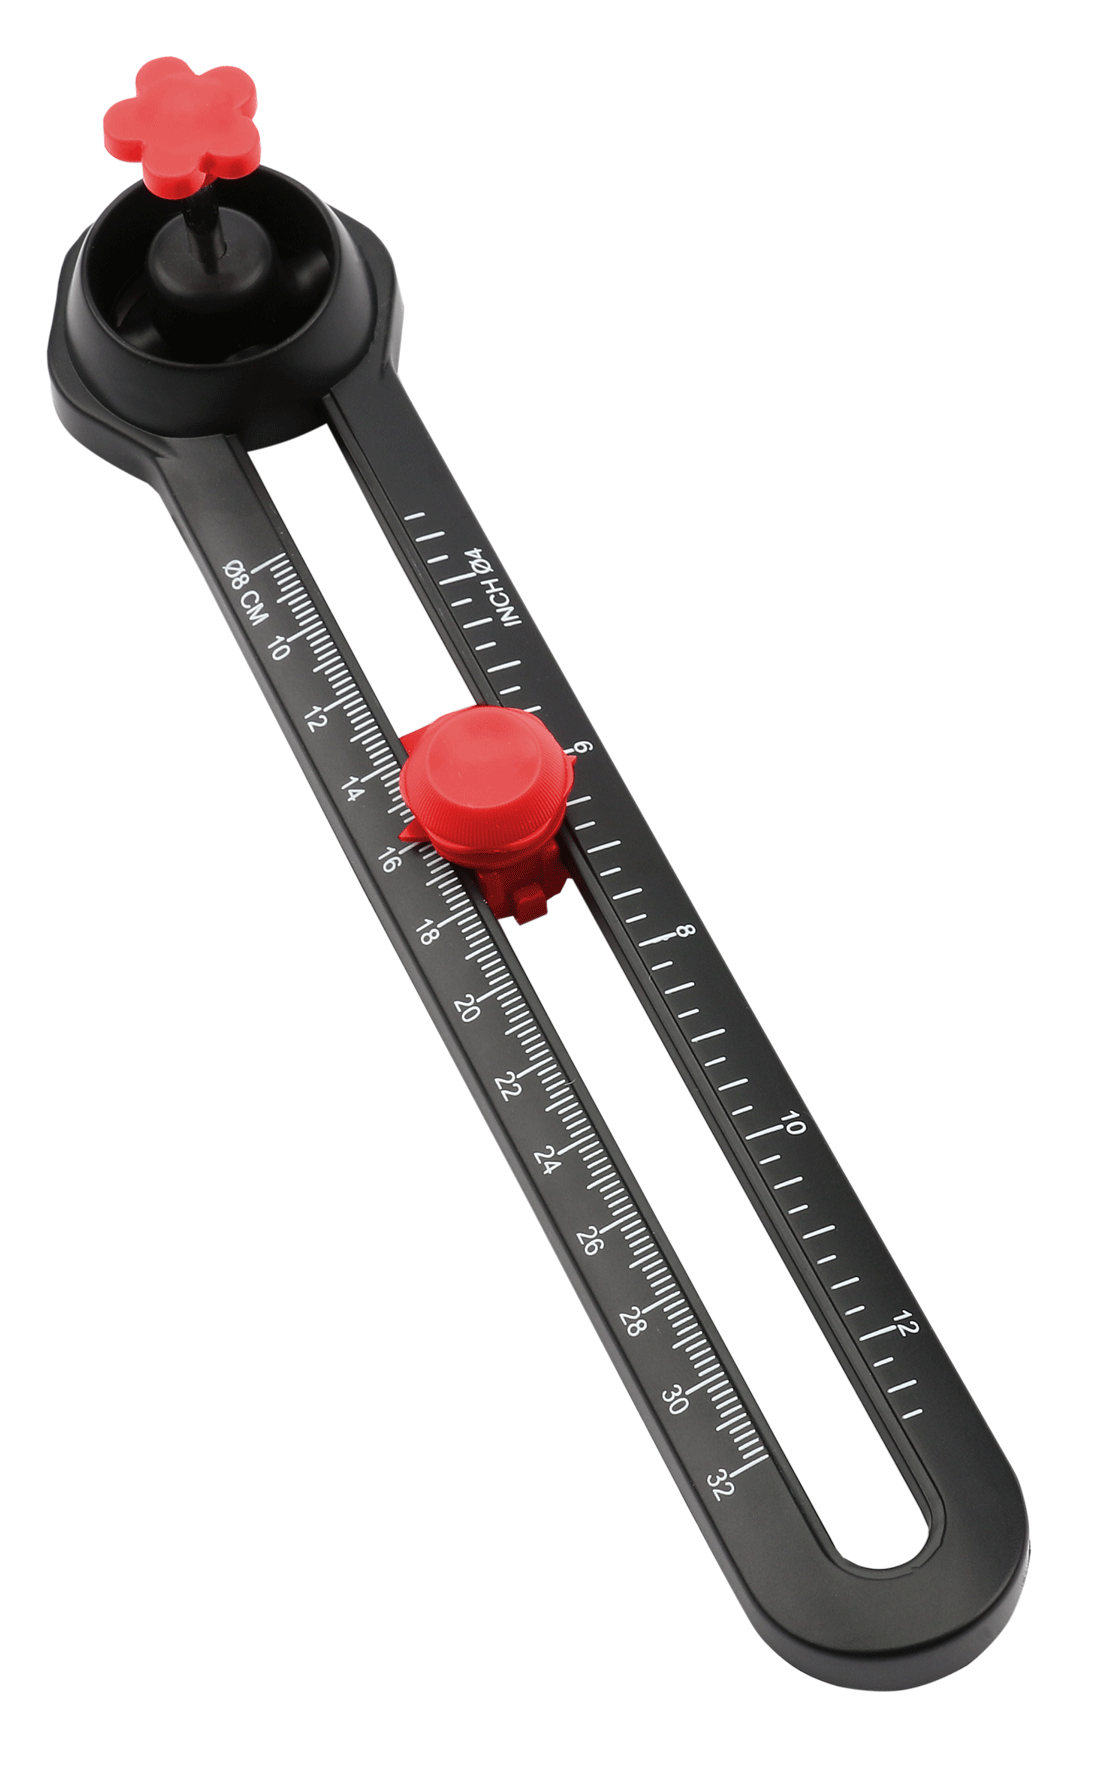 Circular cutter suitable for diameters of 8-32 cm